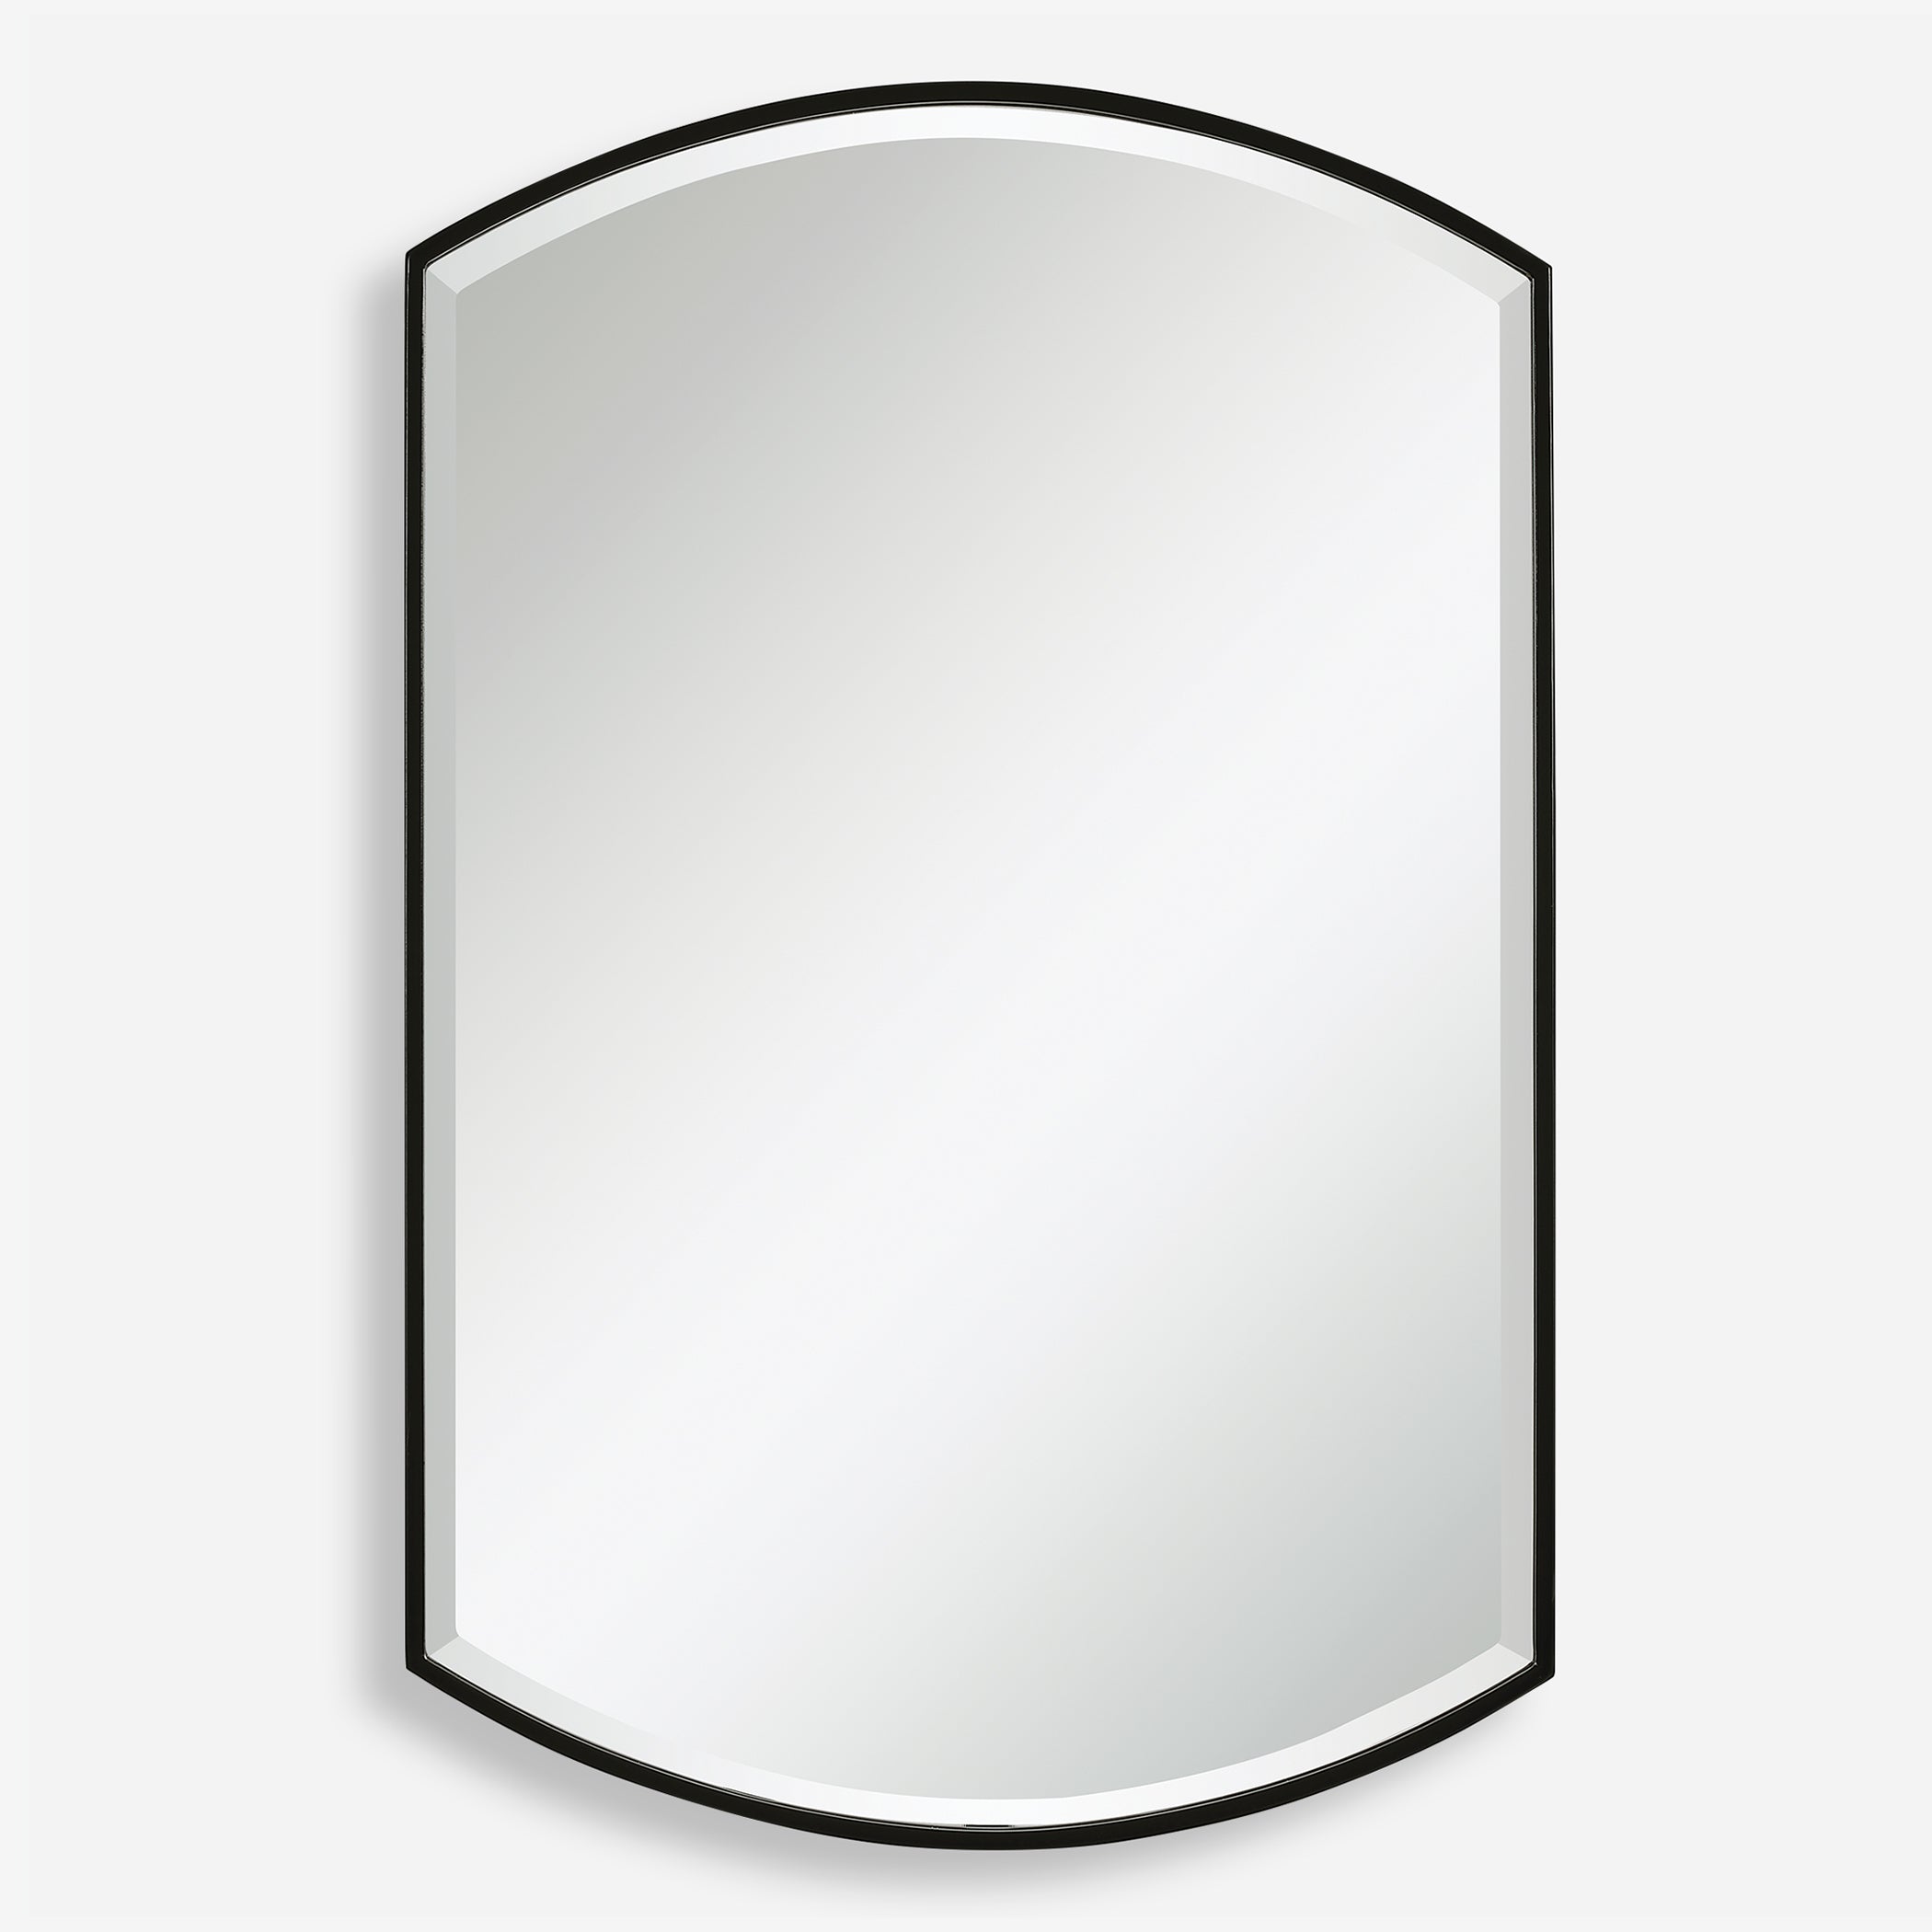 Uttermost Shield Shield Shaped Iron Mirror